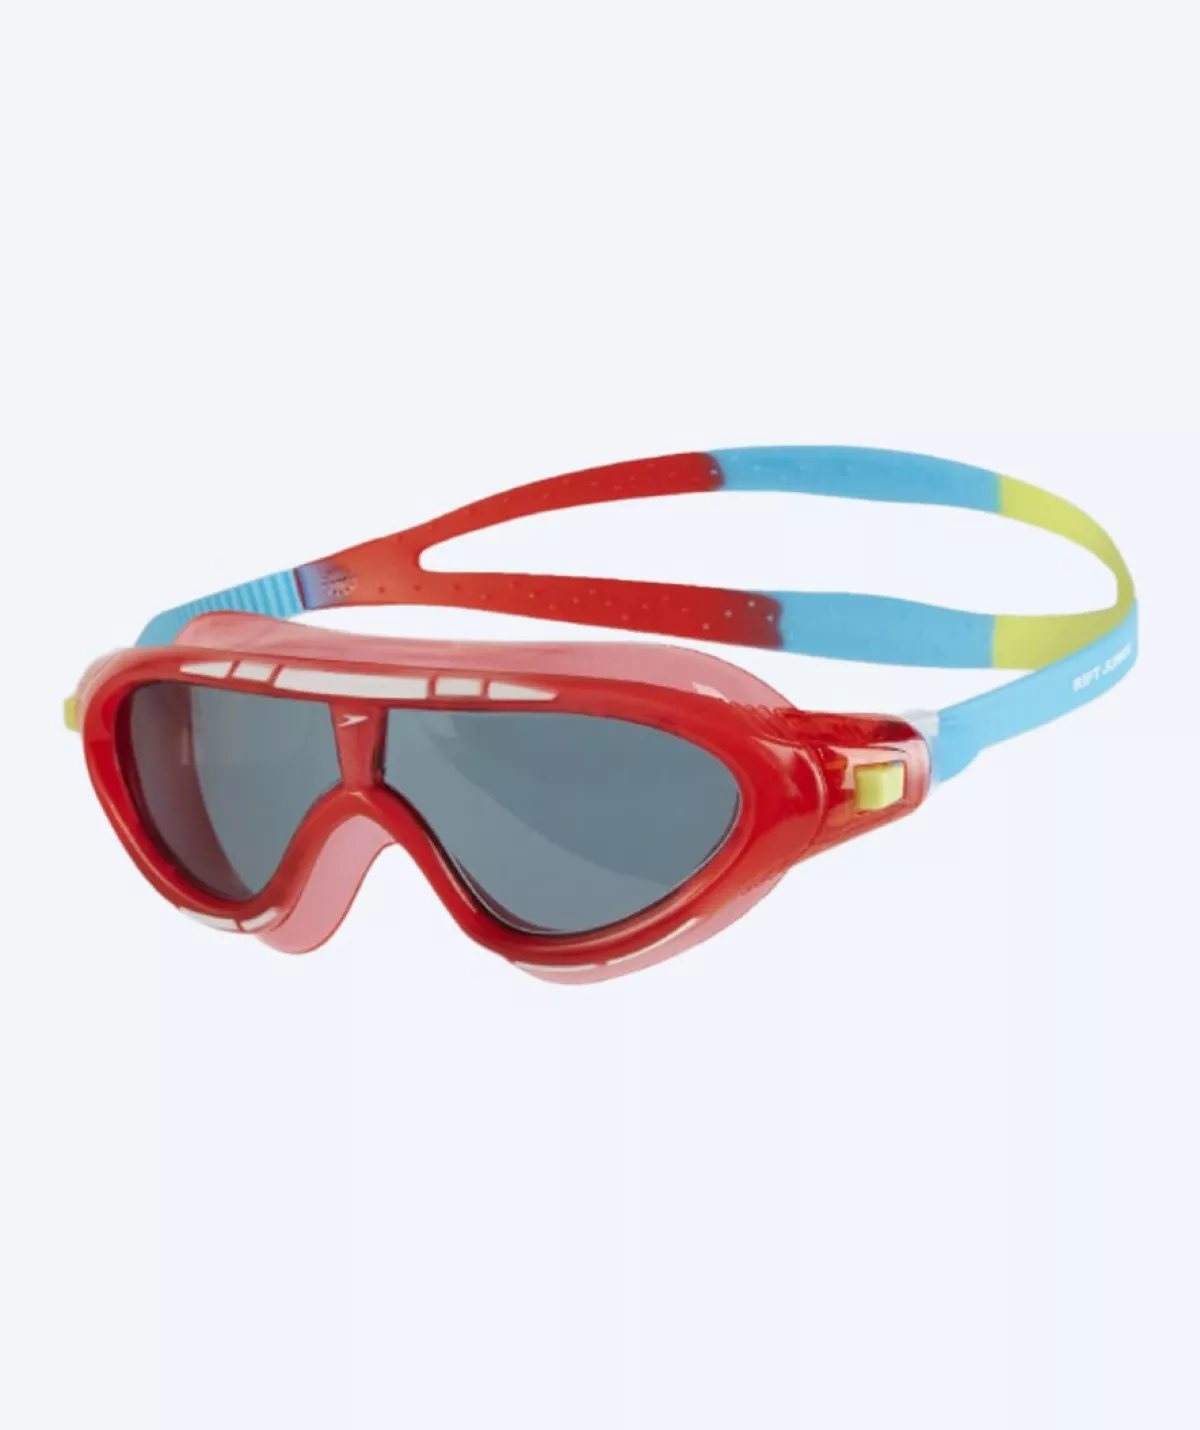 #2 - Speedo dykkerbriller til børn - Rift - Rød/lyseblå/grøn (Smoke glas)